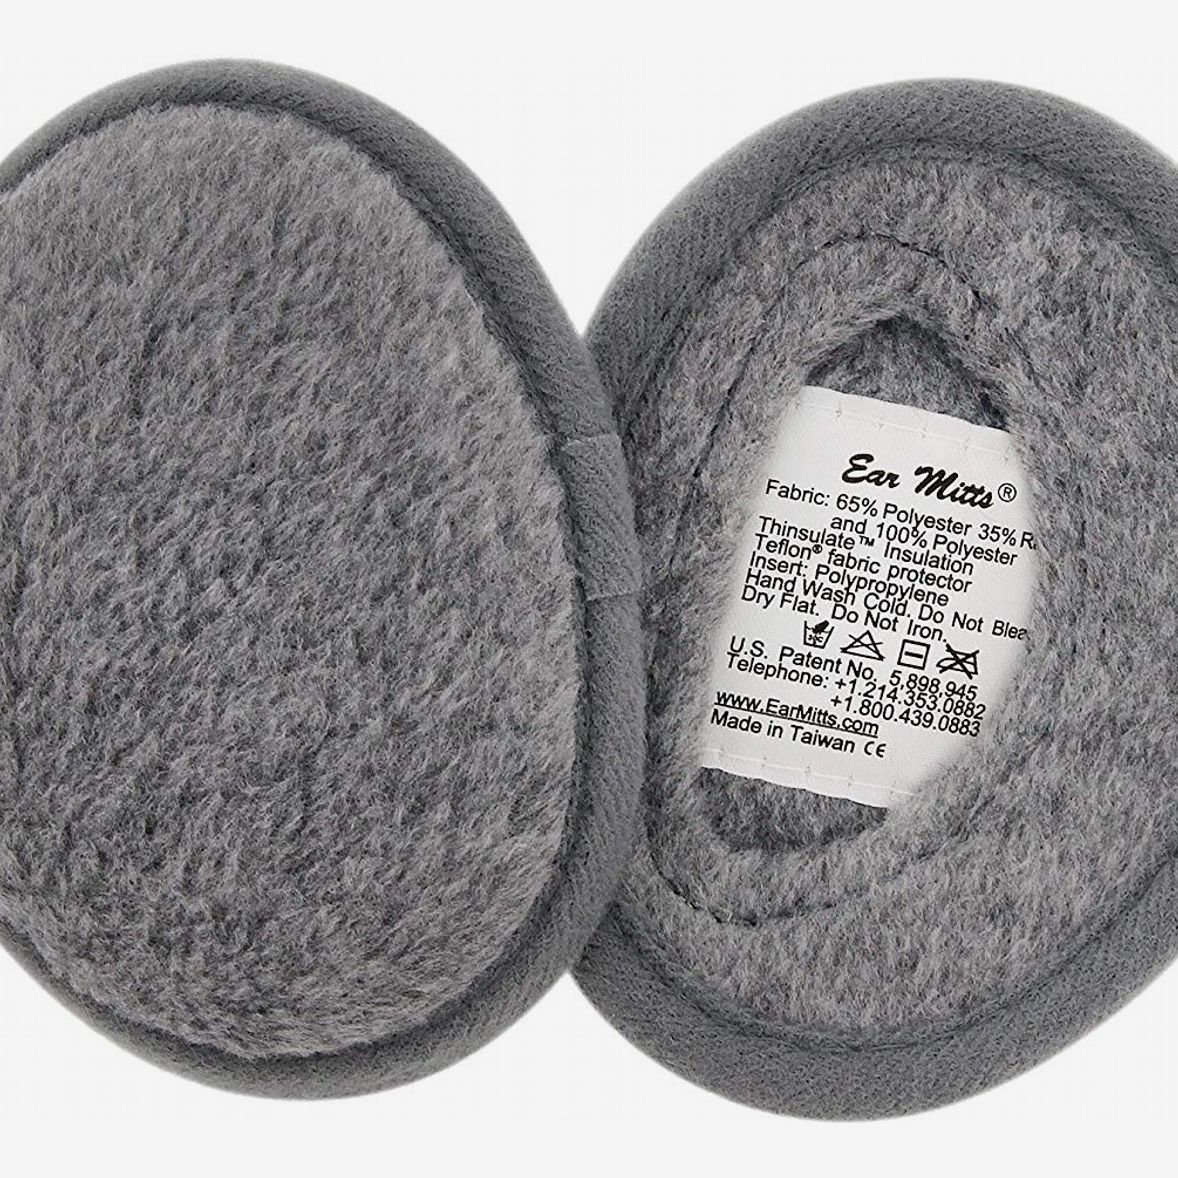 Earbags Earbags Fleece Ear Warmers Hat Used To Be Standard Ear Protection 